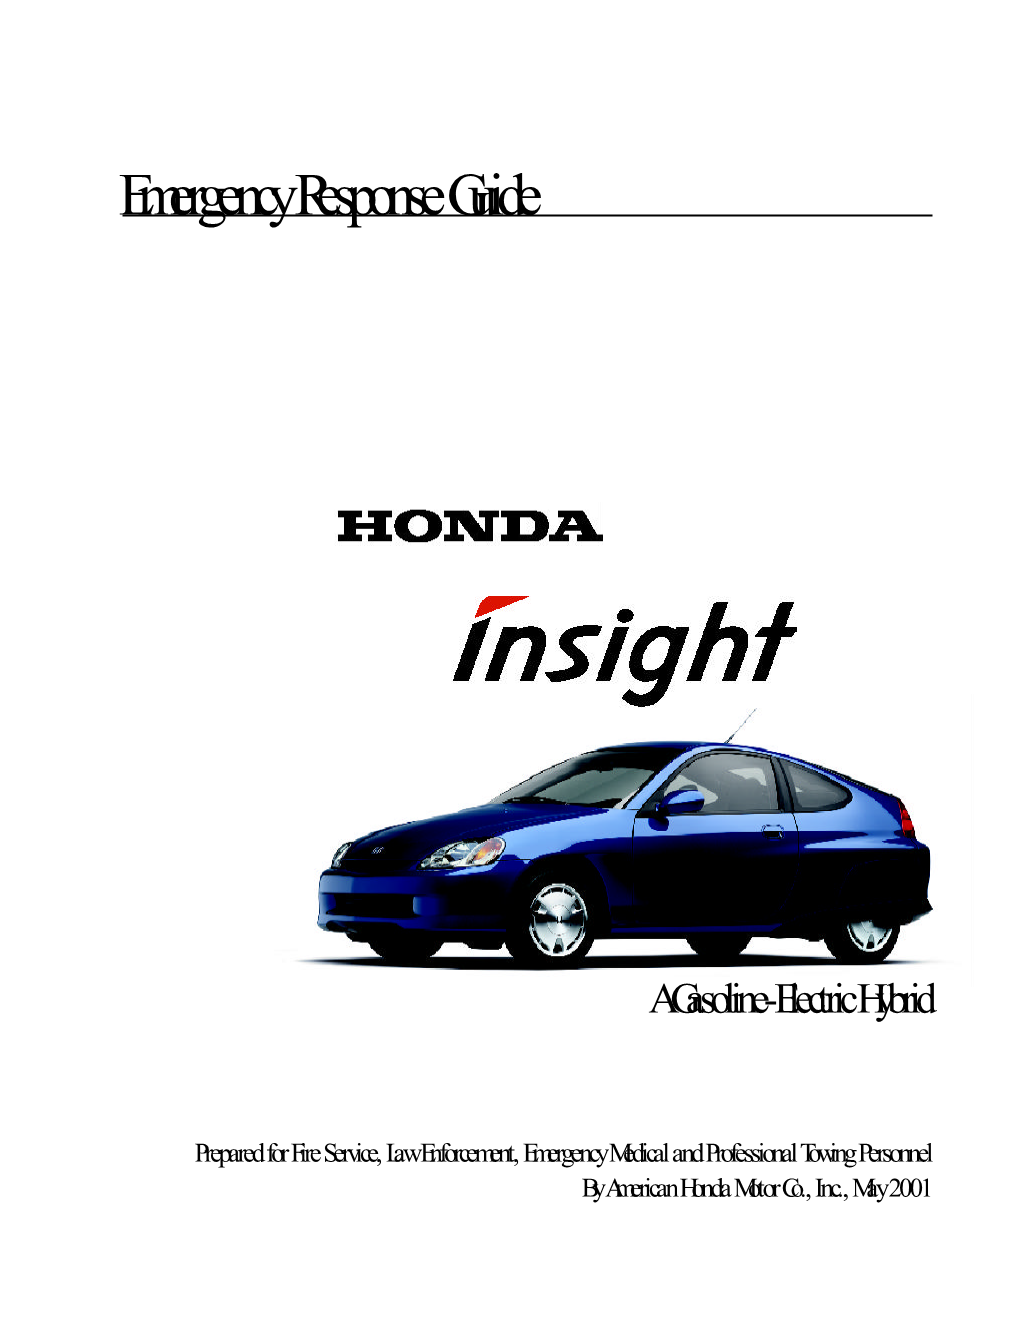 Honda Insight Emergency Response Guide, May 2001 11 Copyright  2001, American Honda Motor Co., Inc